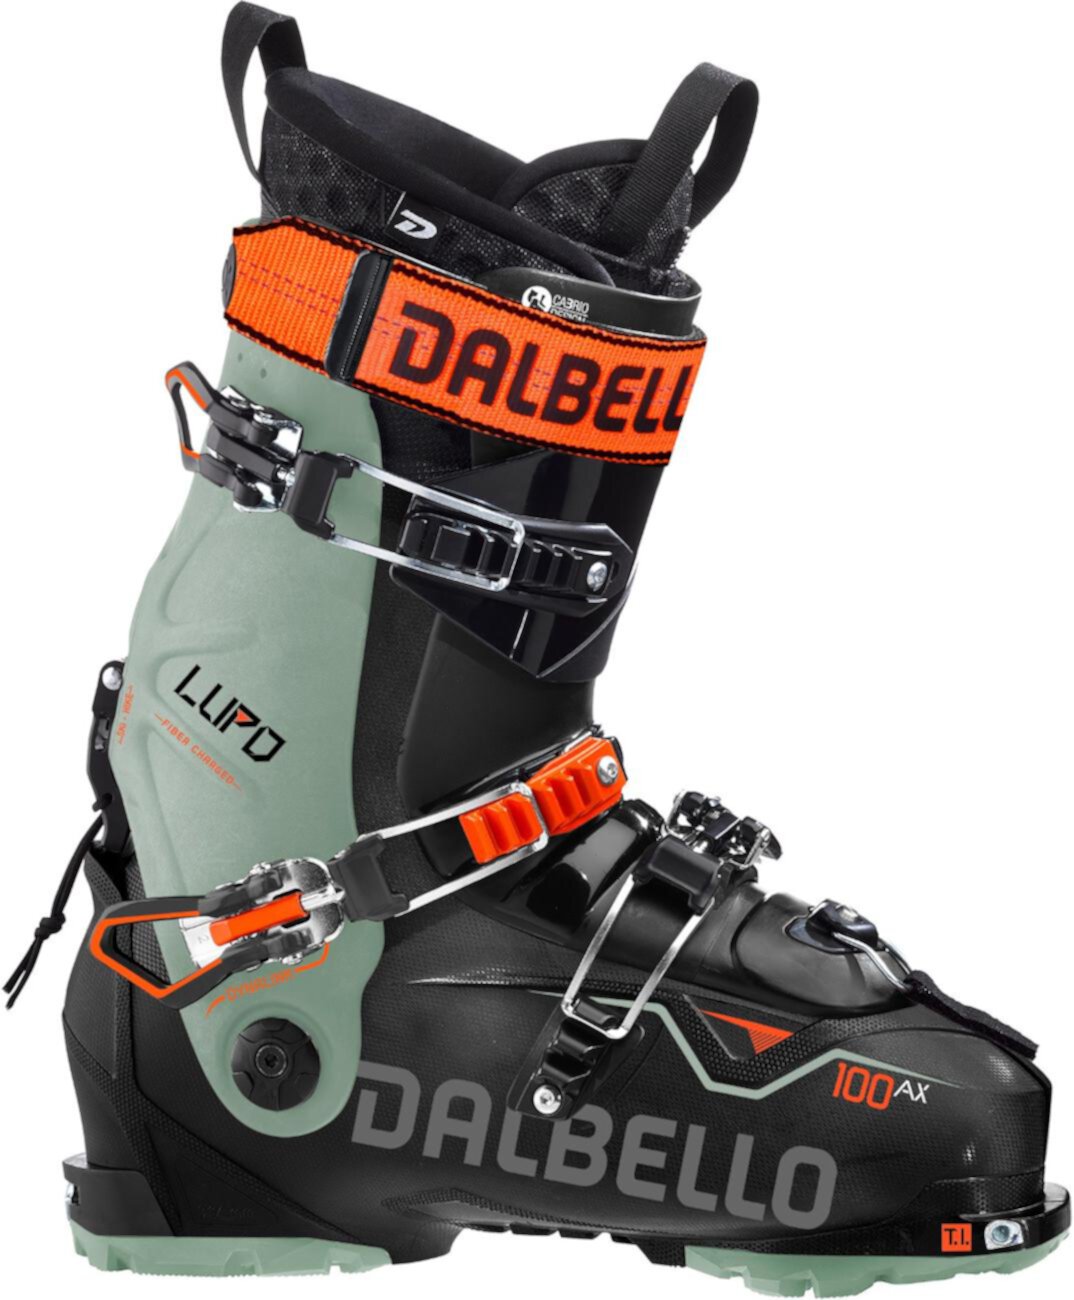 Горнолыжные ботинки Lupo AX 100 Alpine Touring - Женские - 2021/2022 г. Dalbello